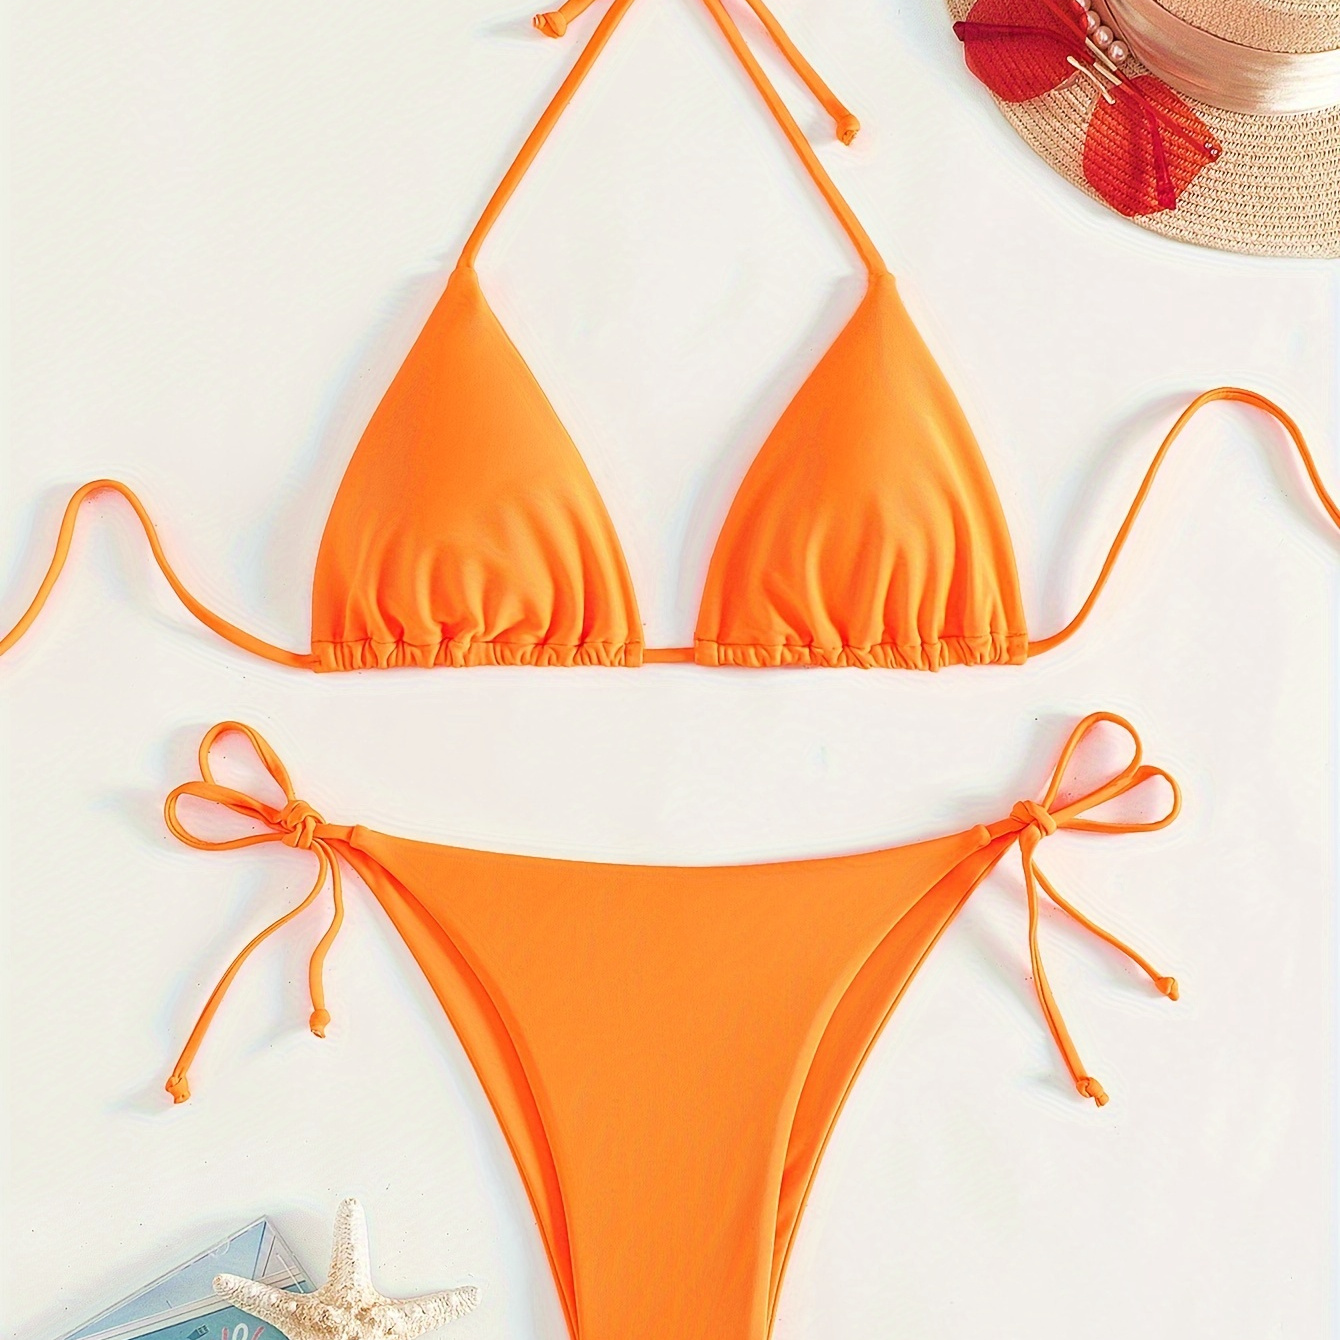 

Women's Two-piece Bikini Swimsuit Set, Adjustable Tie Straps, Summer Beachwear, Quick-dry Fabric, Sexy Halter Neck Top With Matching Bottoms